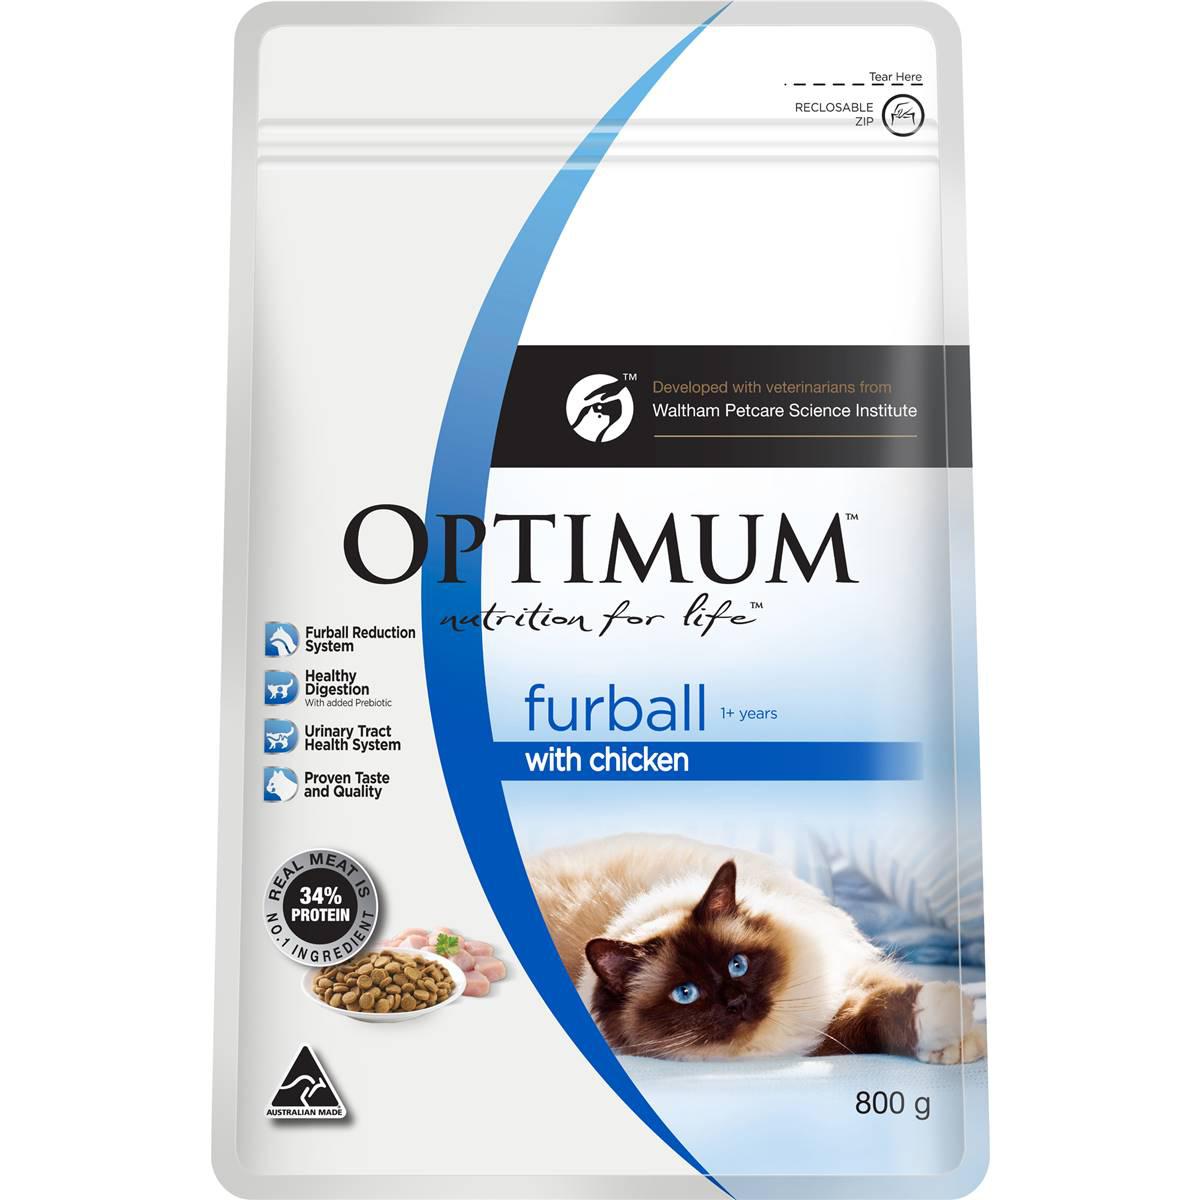 Optimum Furball With Chicken 1+ Years Dry Cat Food 800g